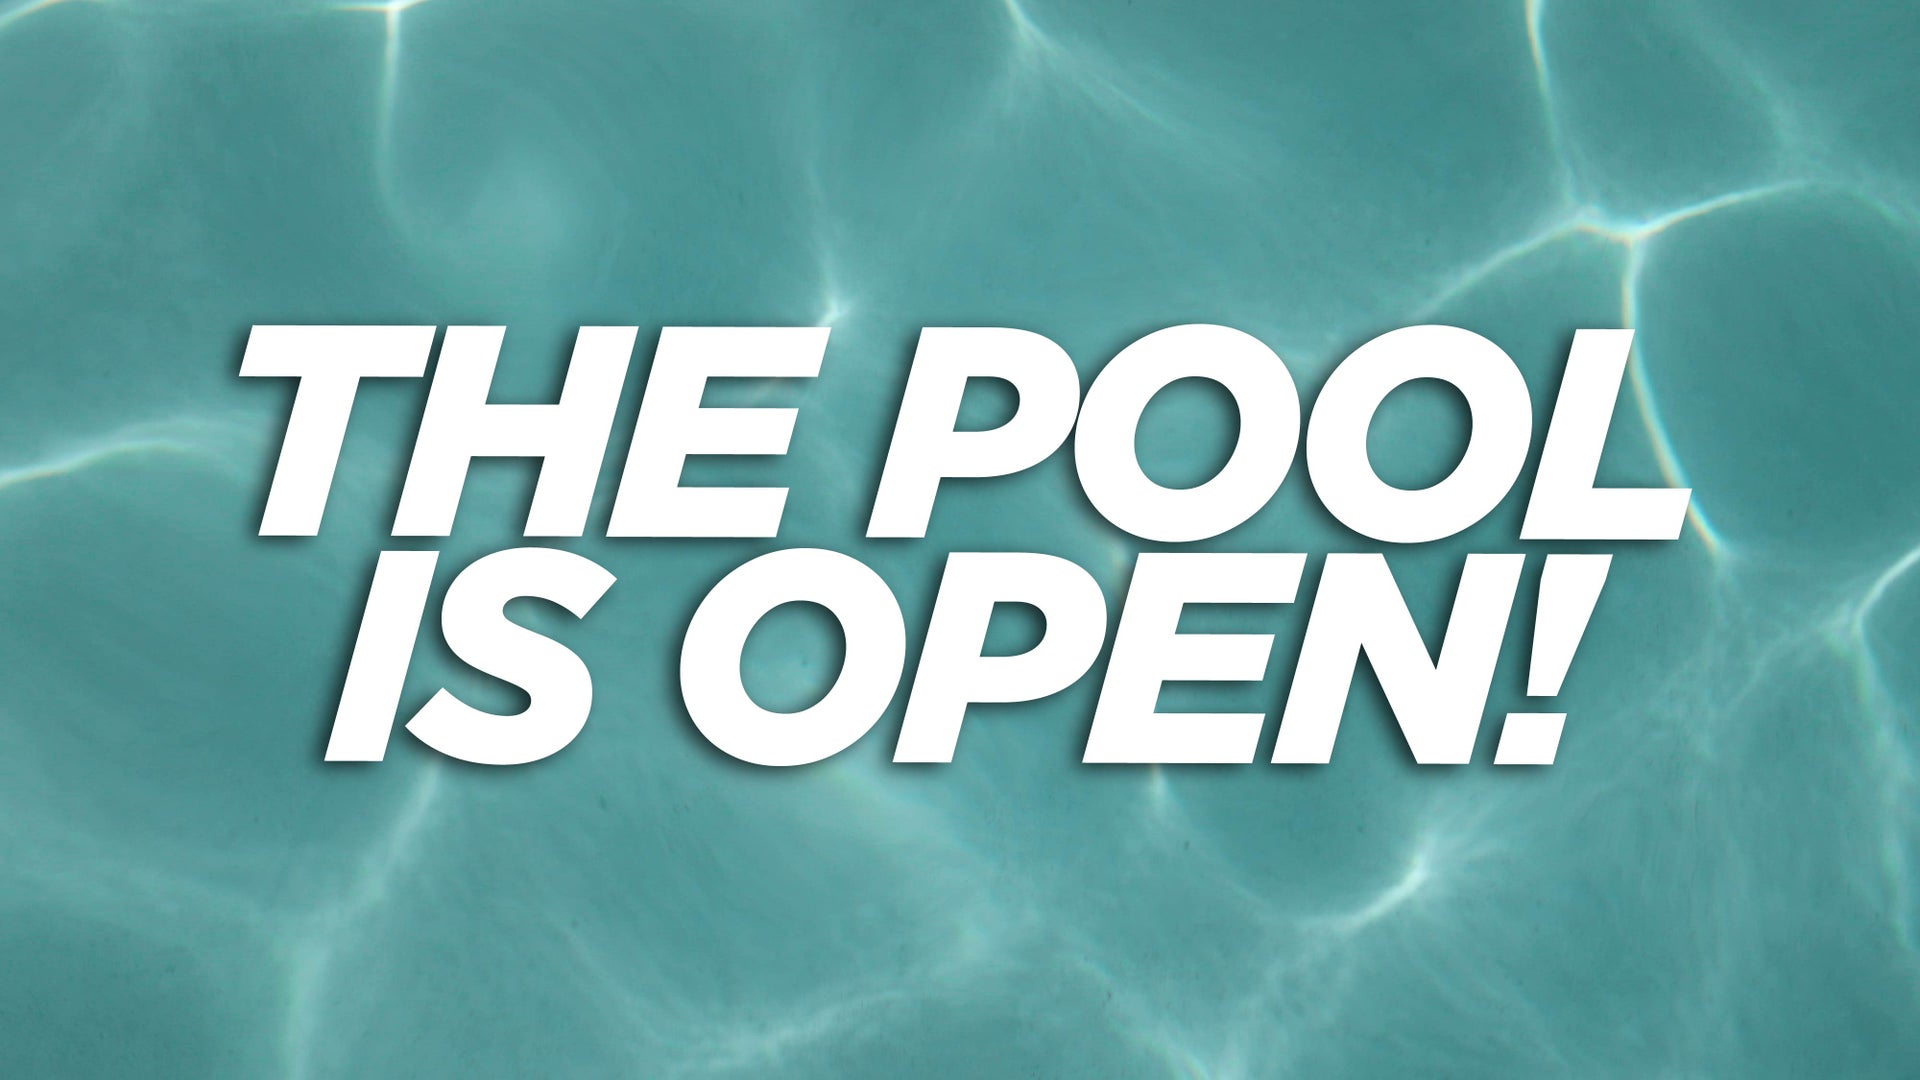 Azalea Pool Grand Opening